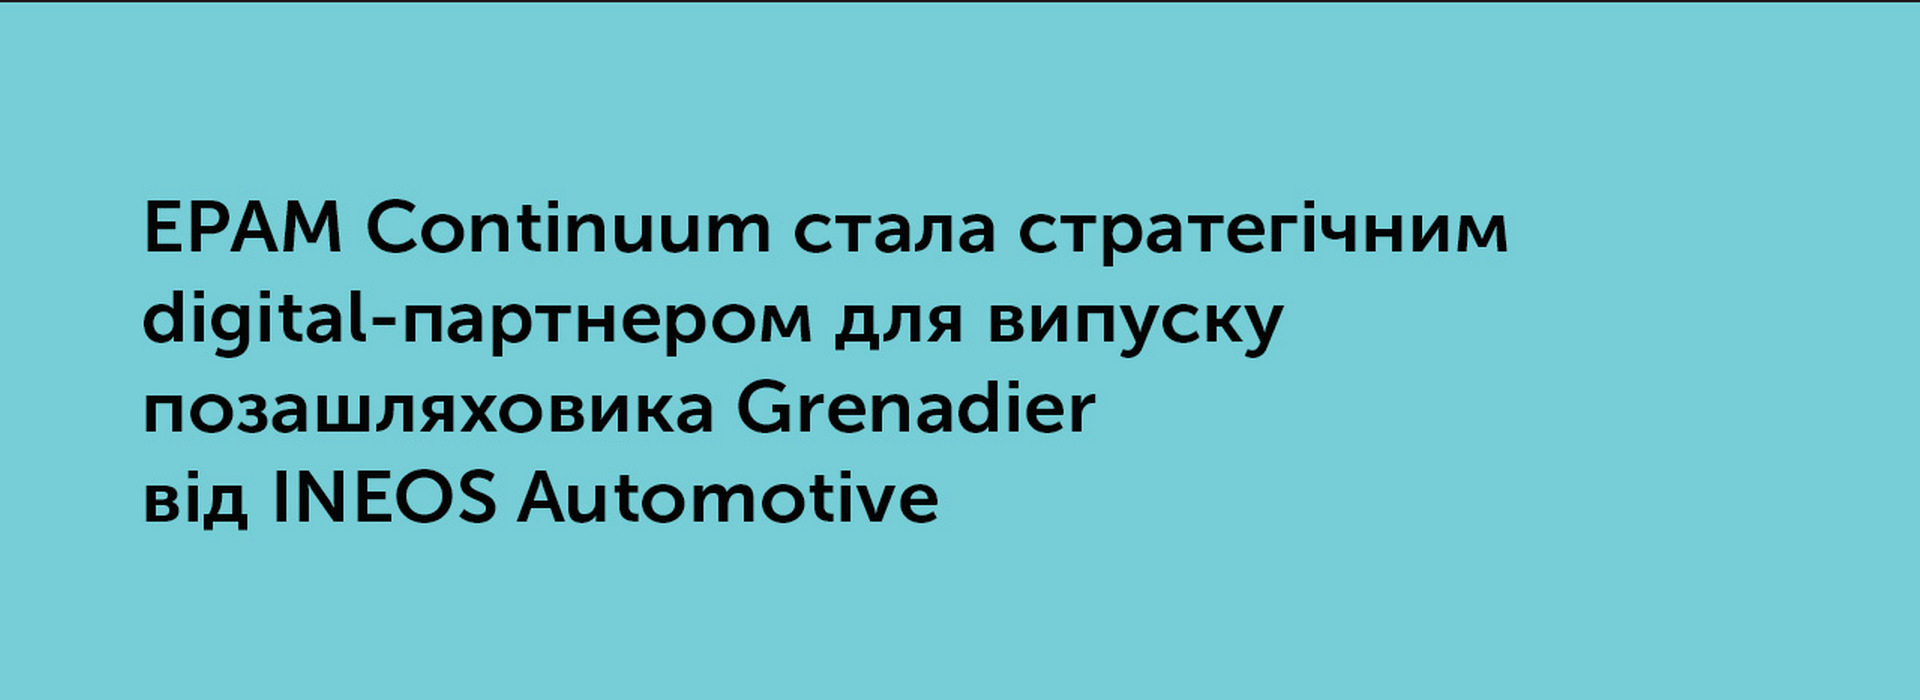 EPAM Continuum стала стратегічним digital-партнером для випуску позашляховика Grenadier від INEOS Automotive